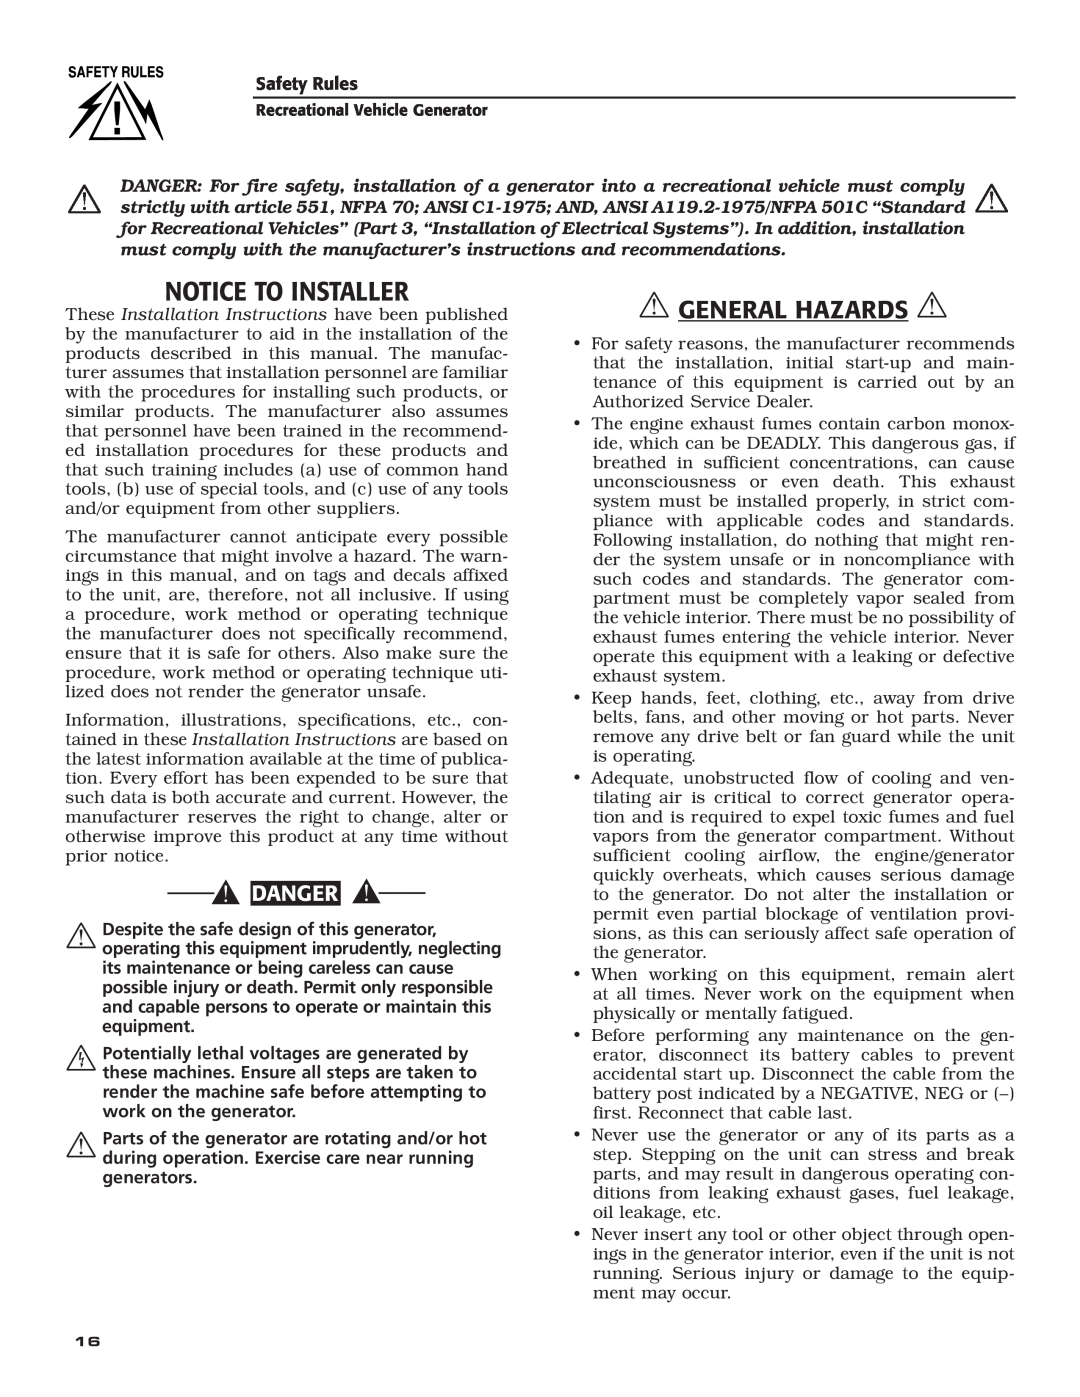 Guardian Technologies 004701-0 owner manual Notice to Installer,  General Hazards, danger 